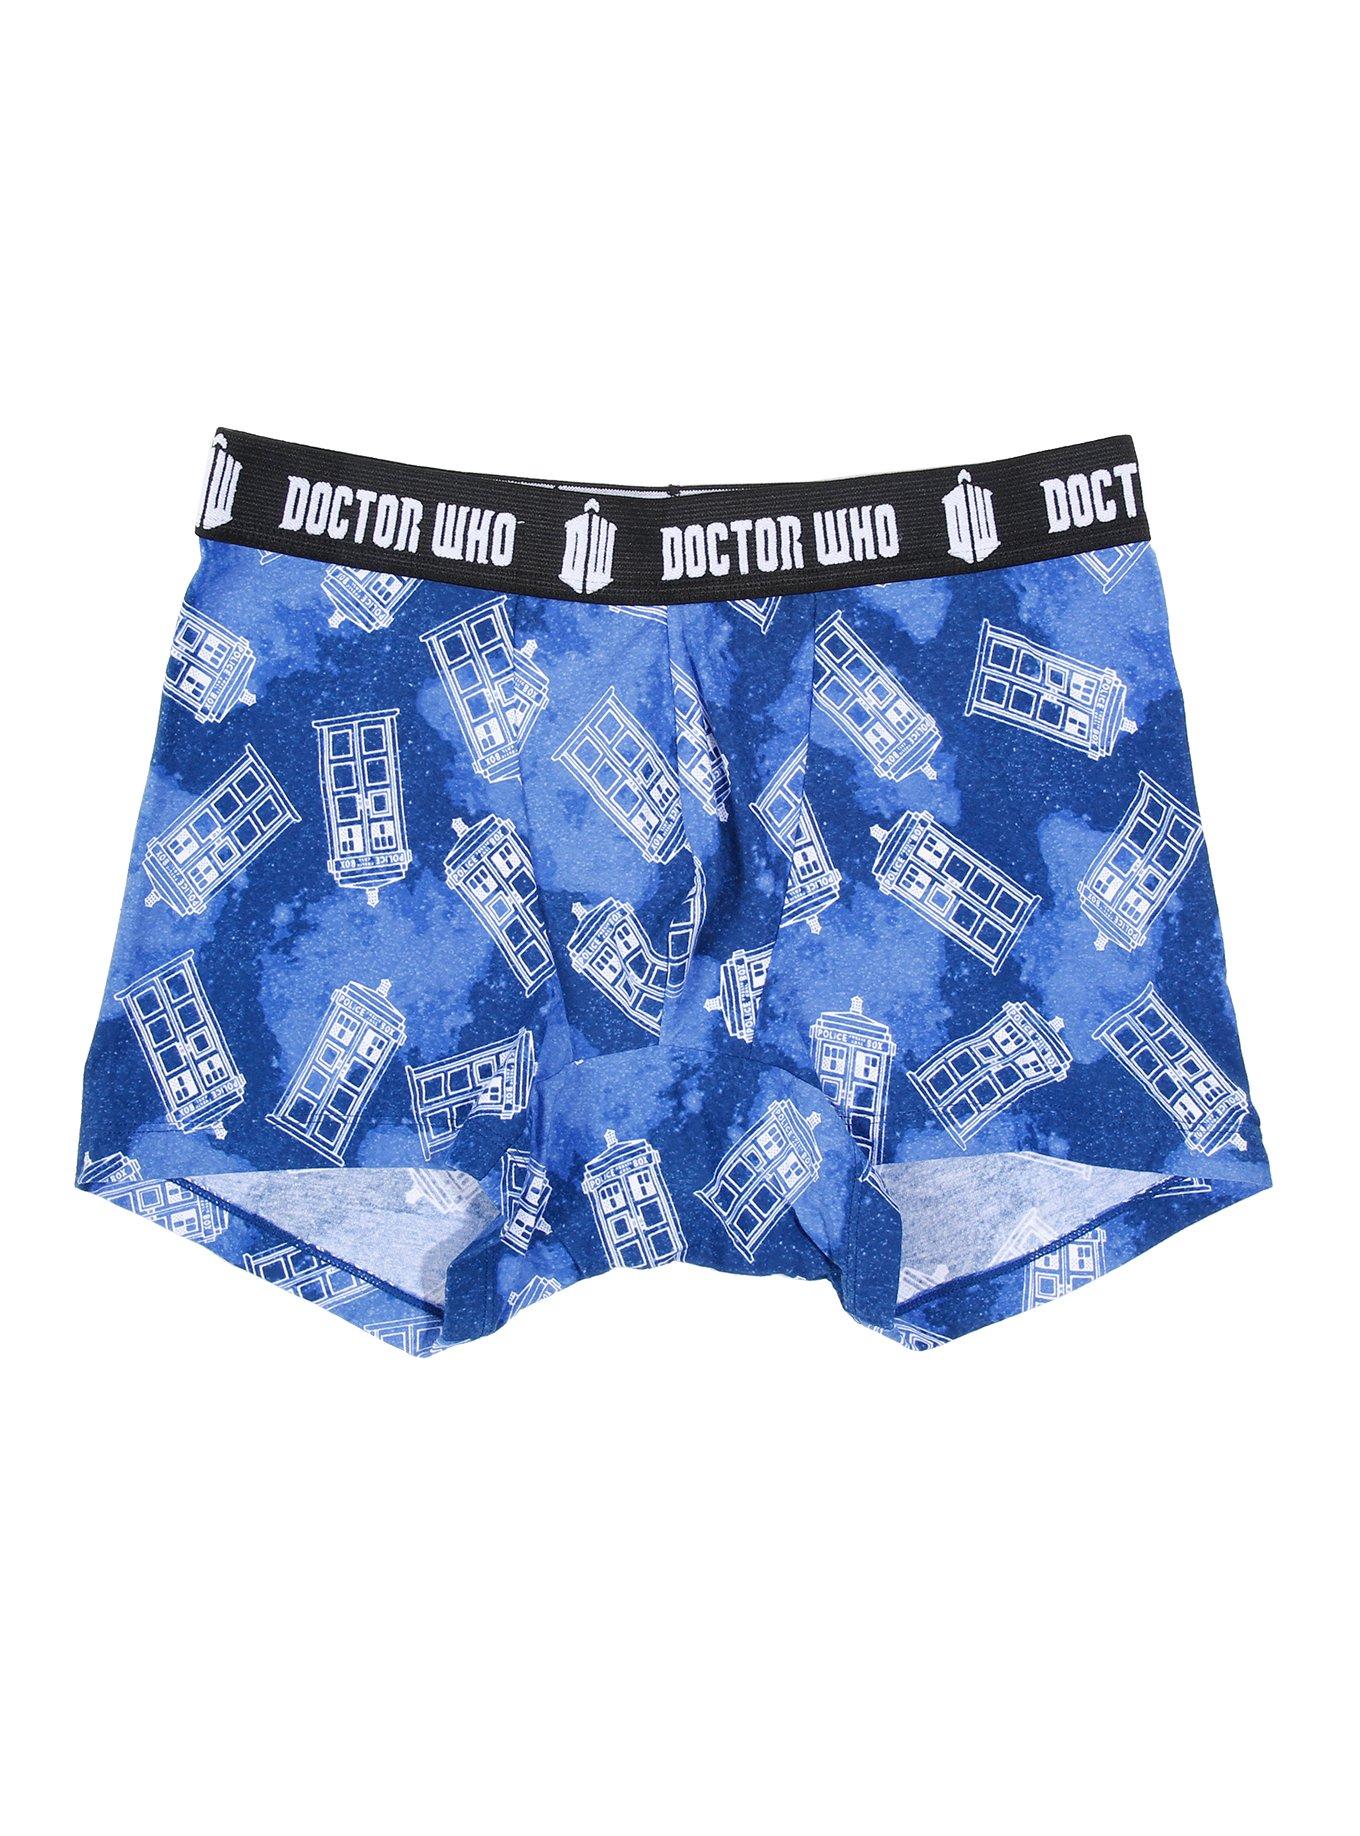 Dr. Who TARDIS Galaxy Boxer Briefs | Hot Topic